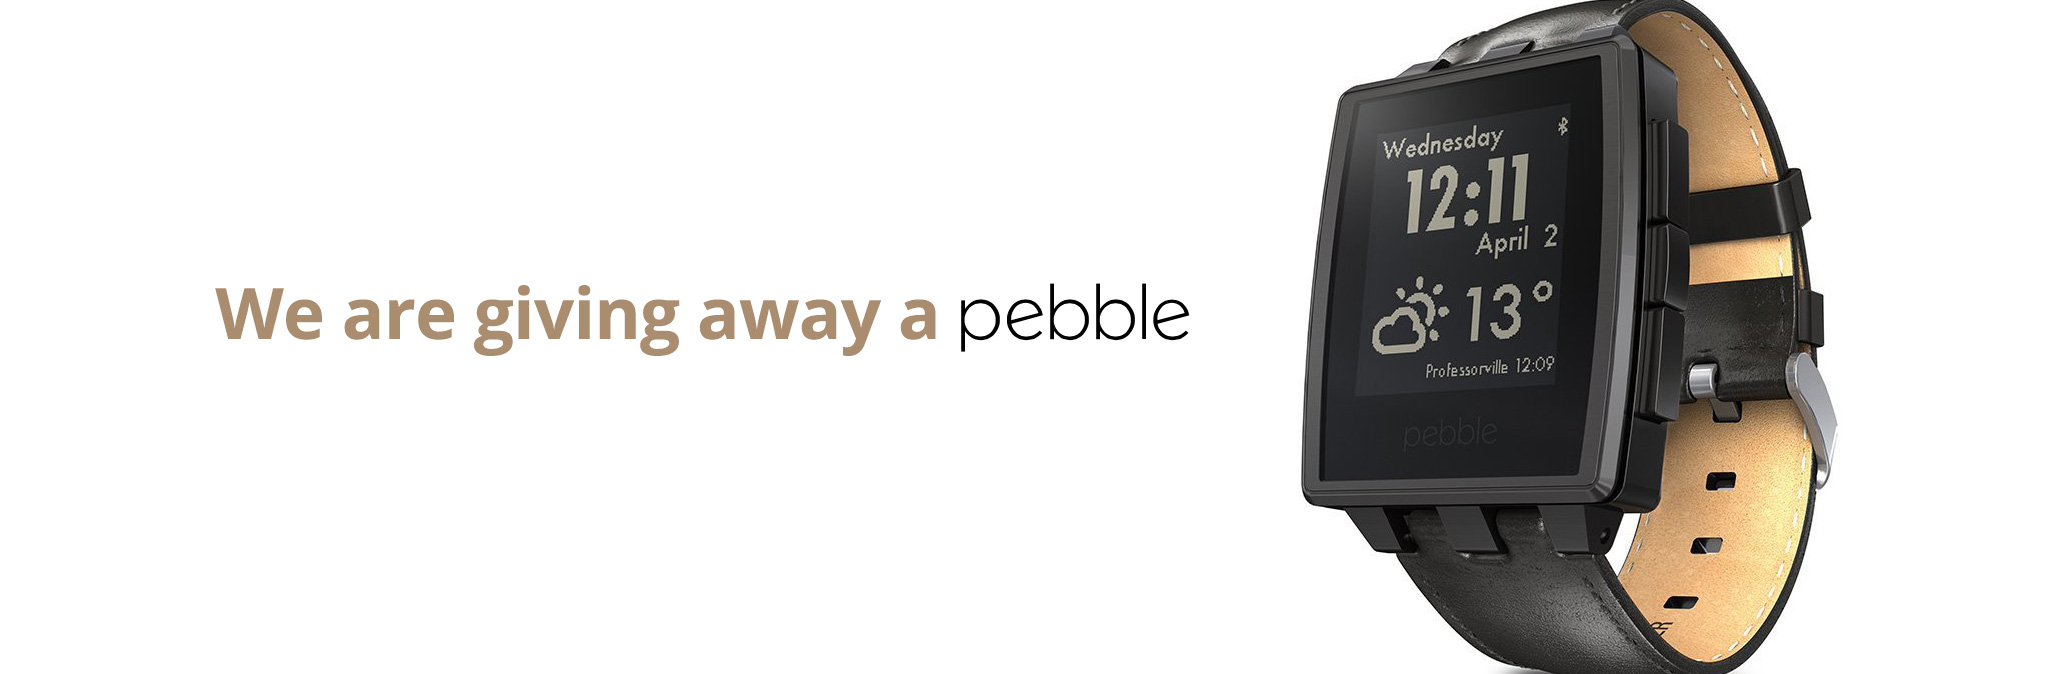 Pebble watch